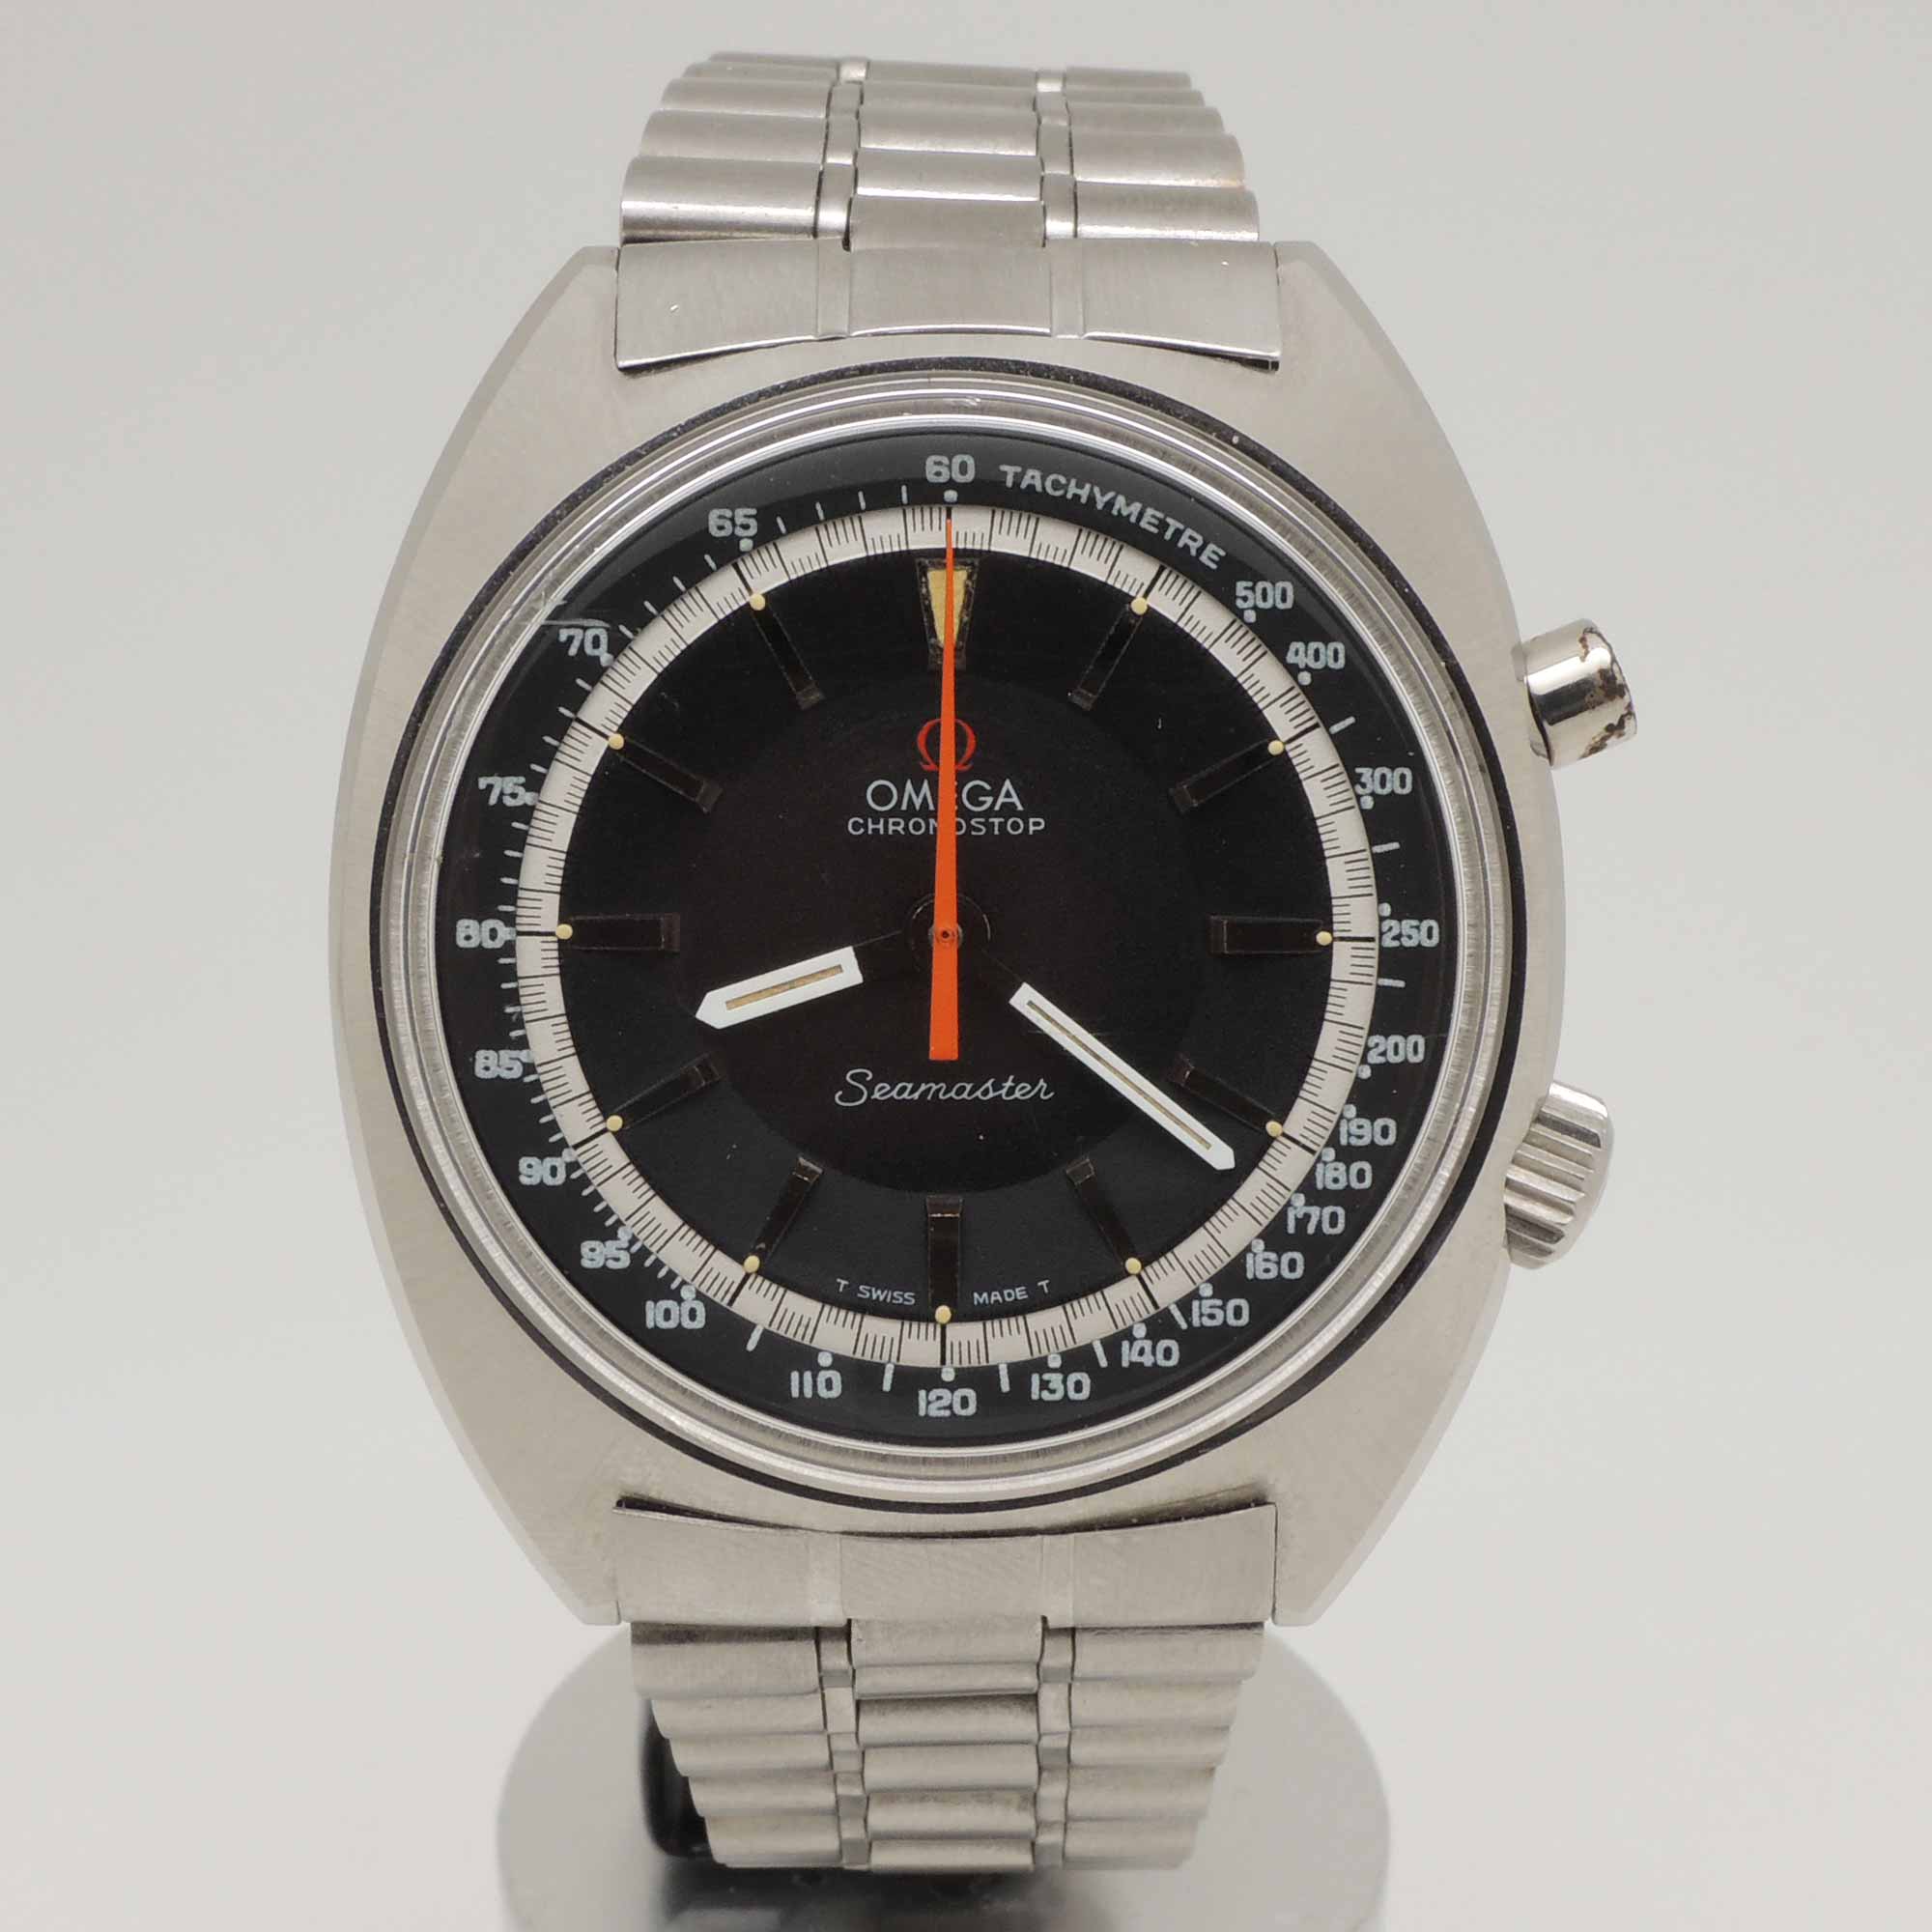 [1966] 145.007 - Omega Seamaster Chronostop, ou comment chronométrer sans chronographe 01281a2